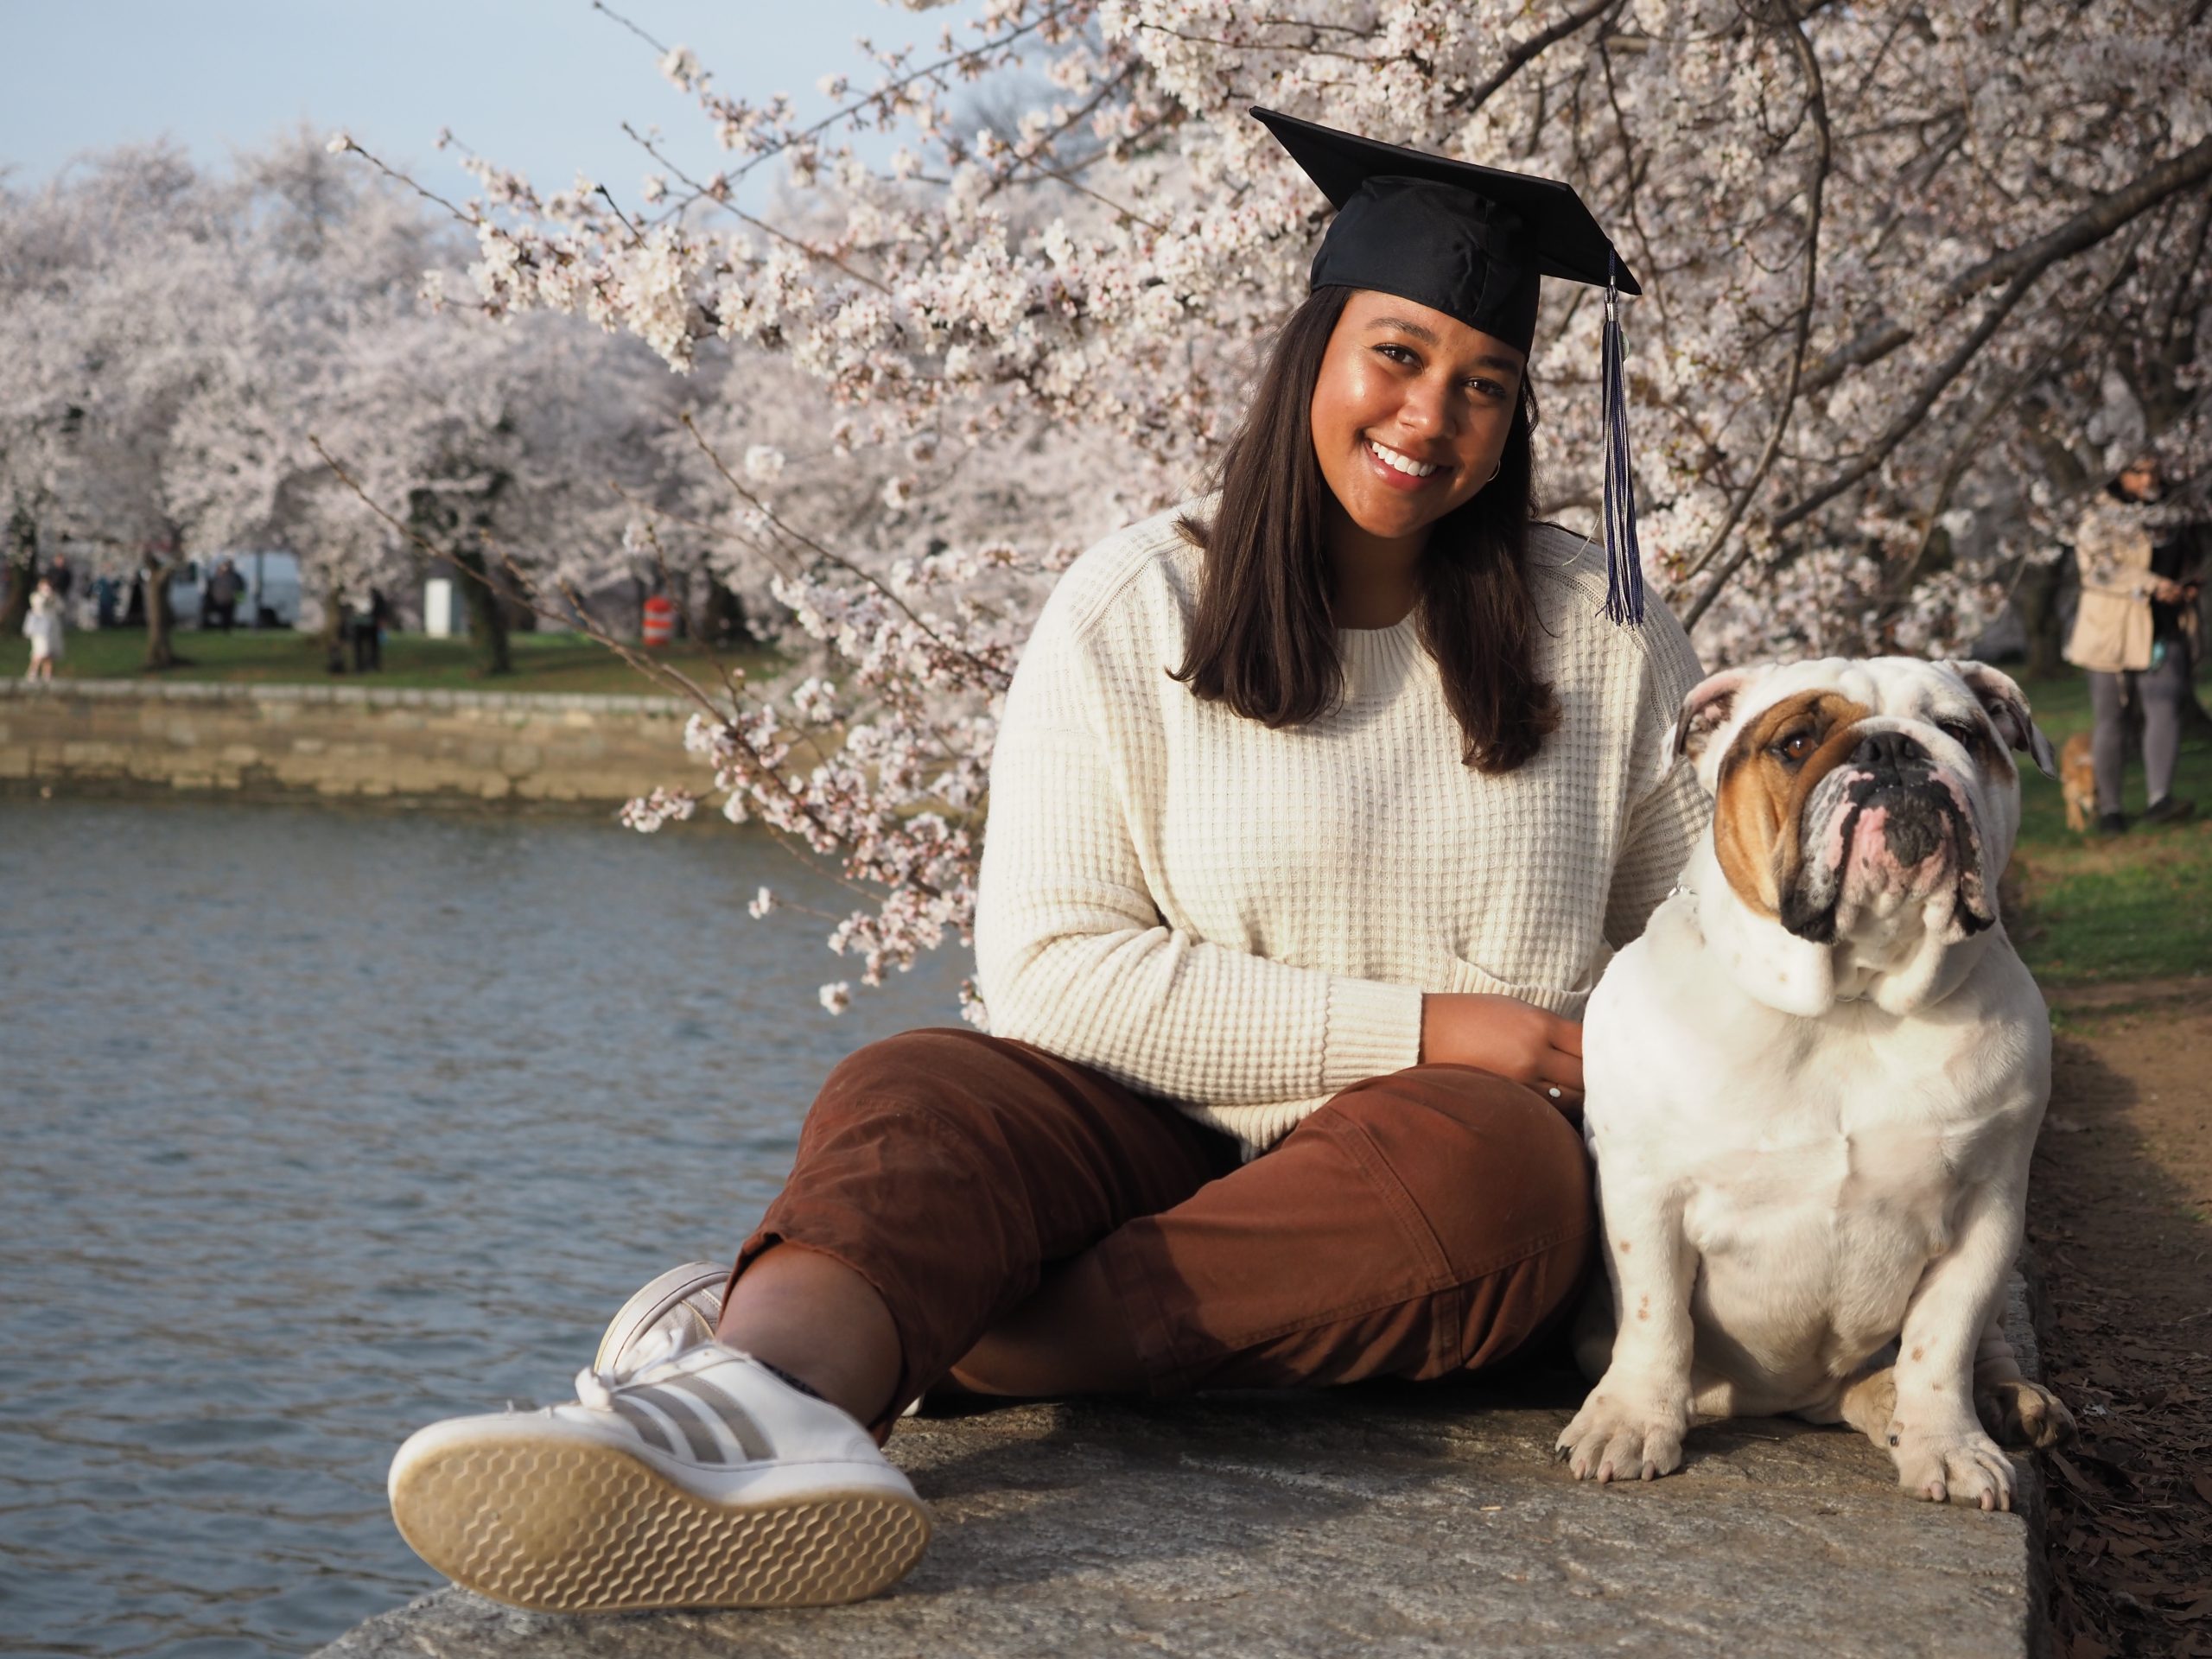 Maya with a graduation cap and Jack the Bulldog